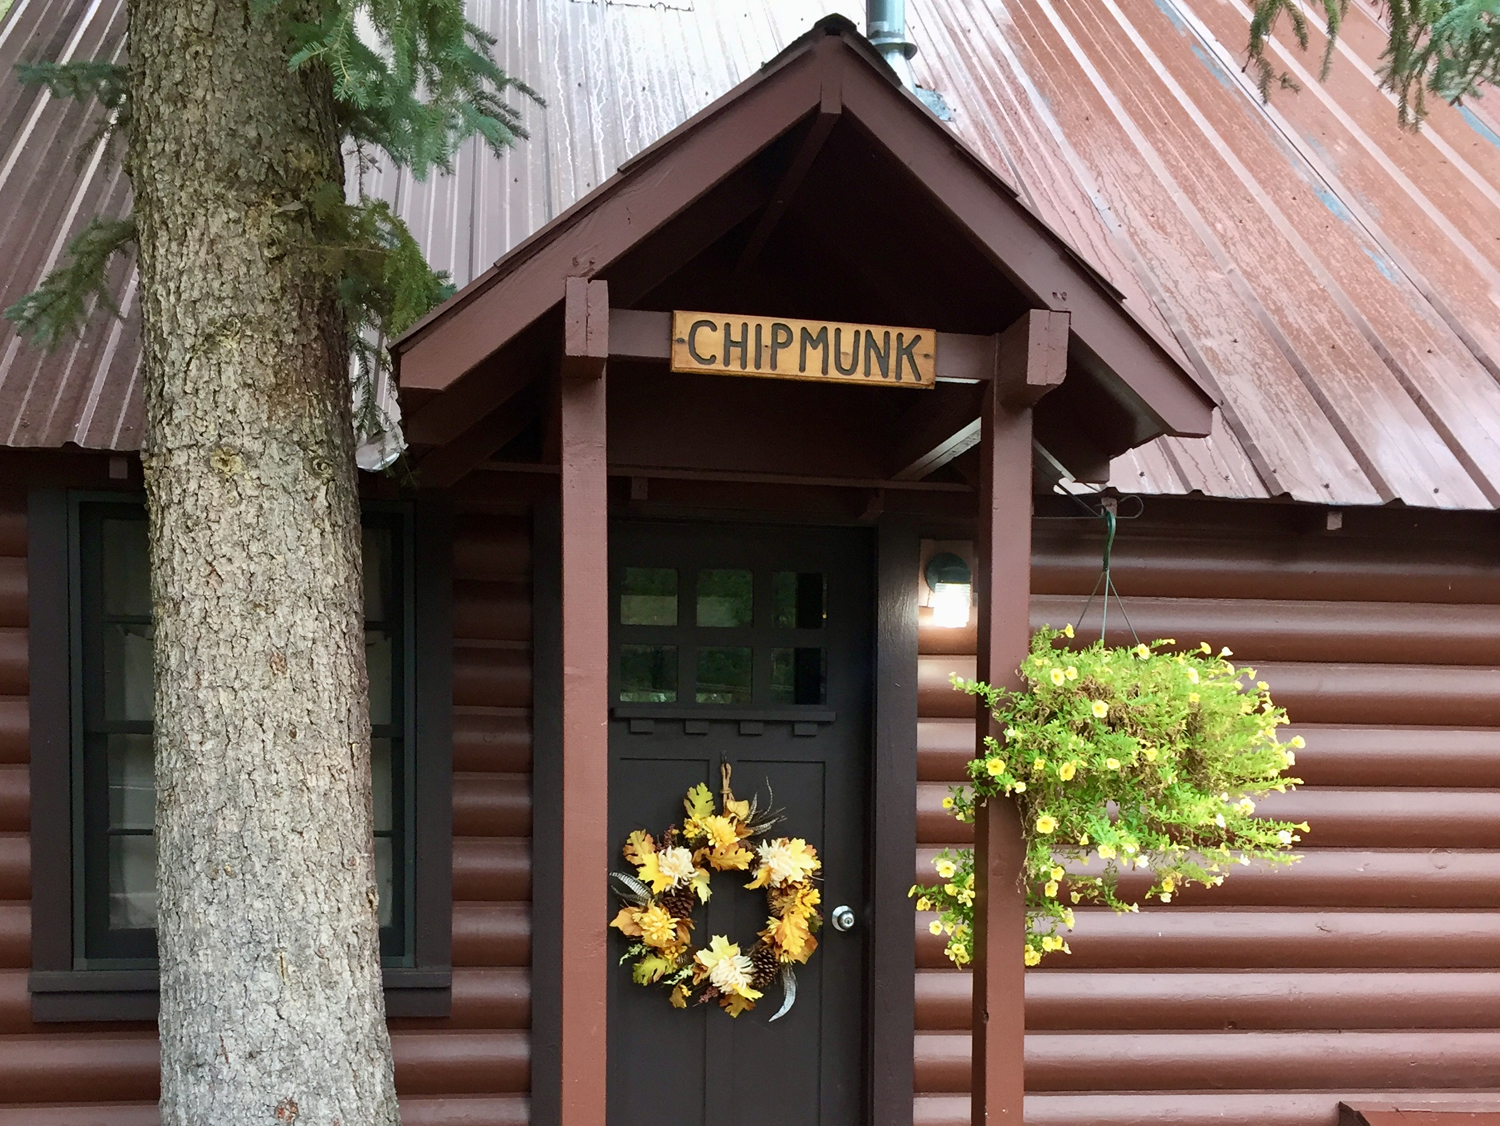 Chipmunk frontview